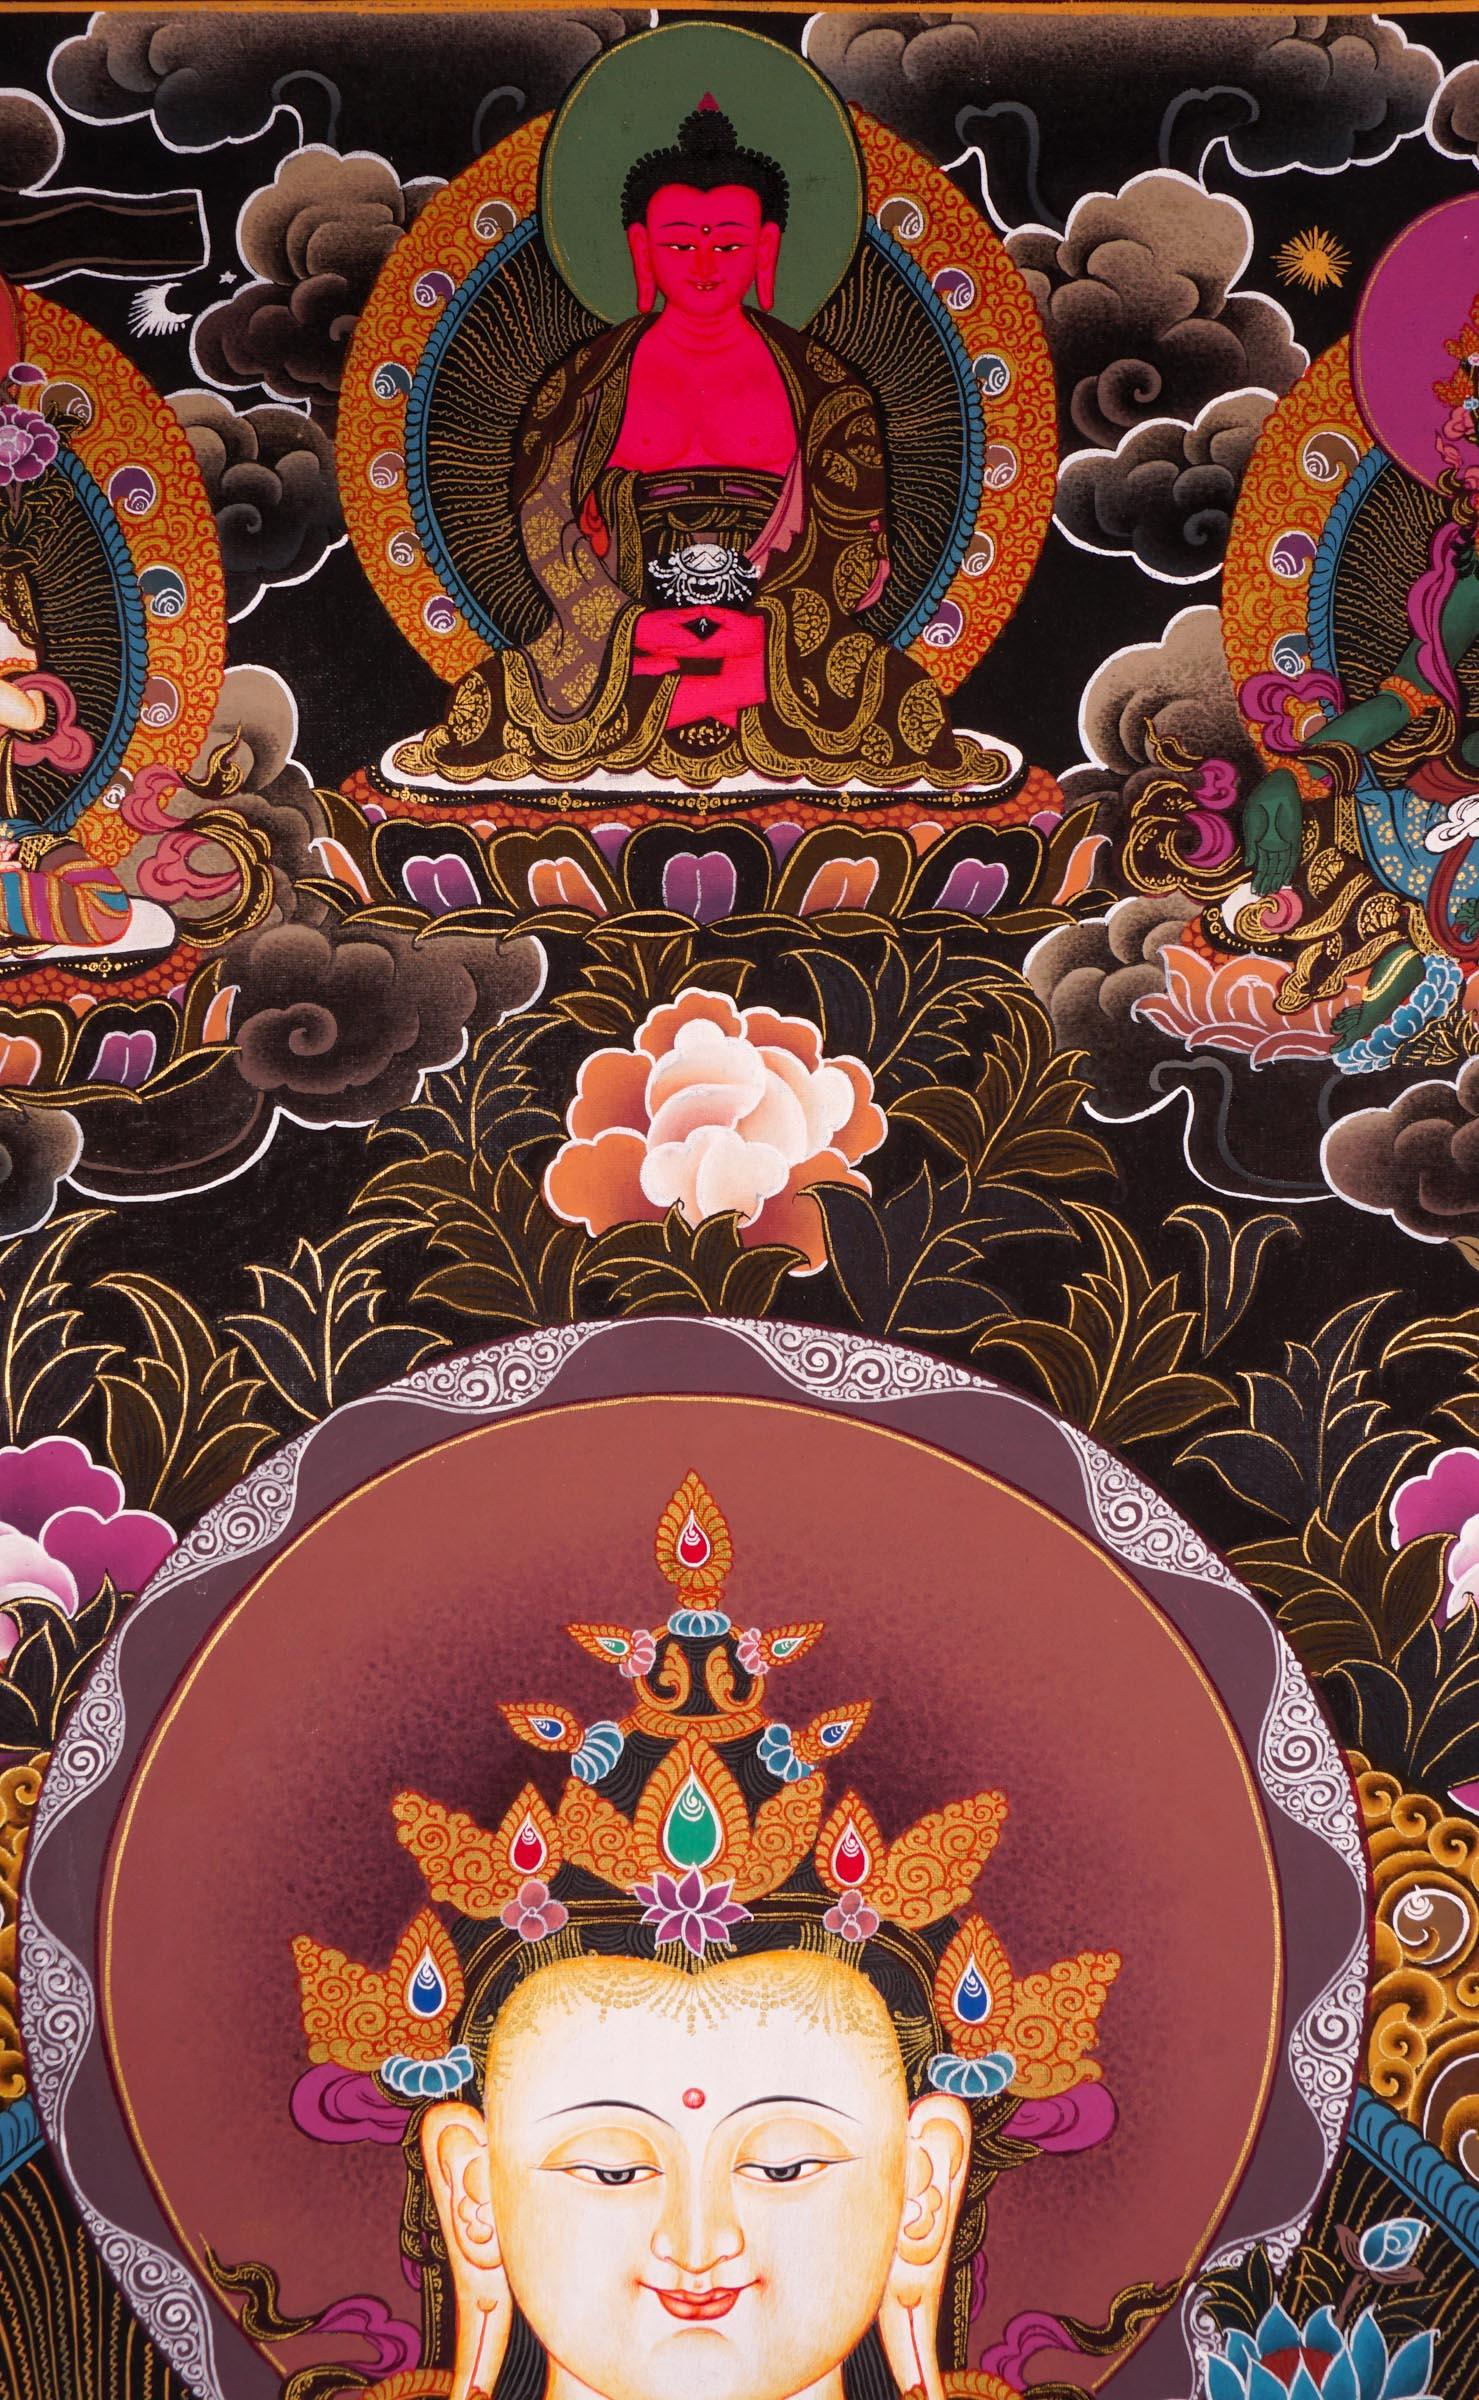 Chengresi Tibetan Thangka Painting with 13 Deities